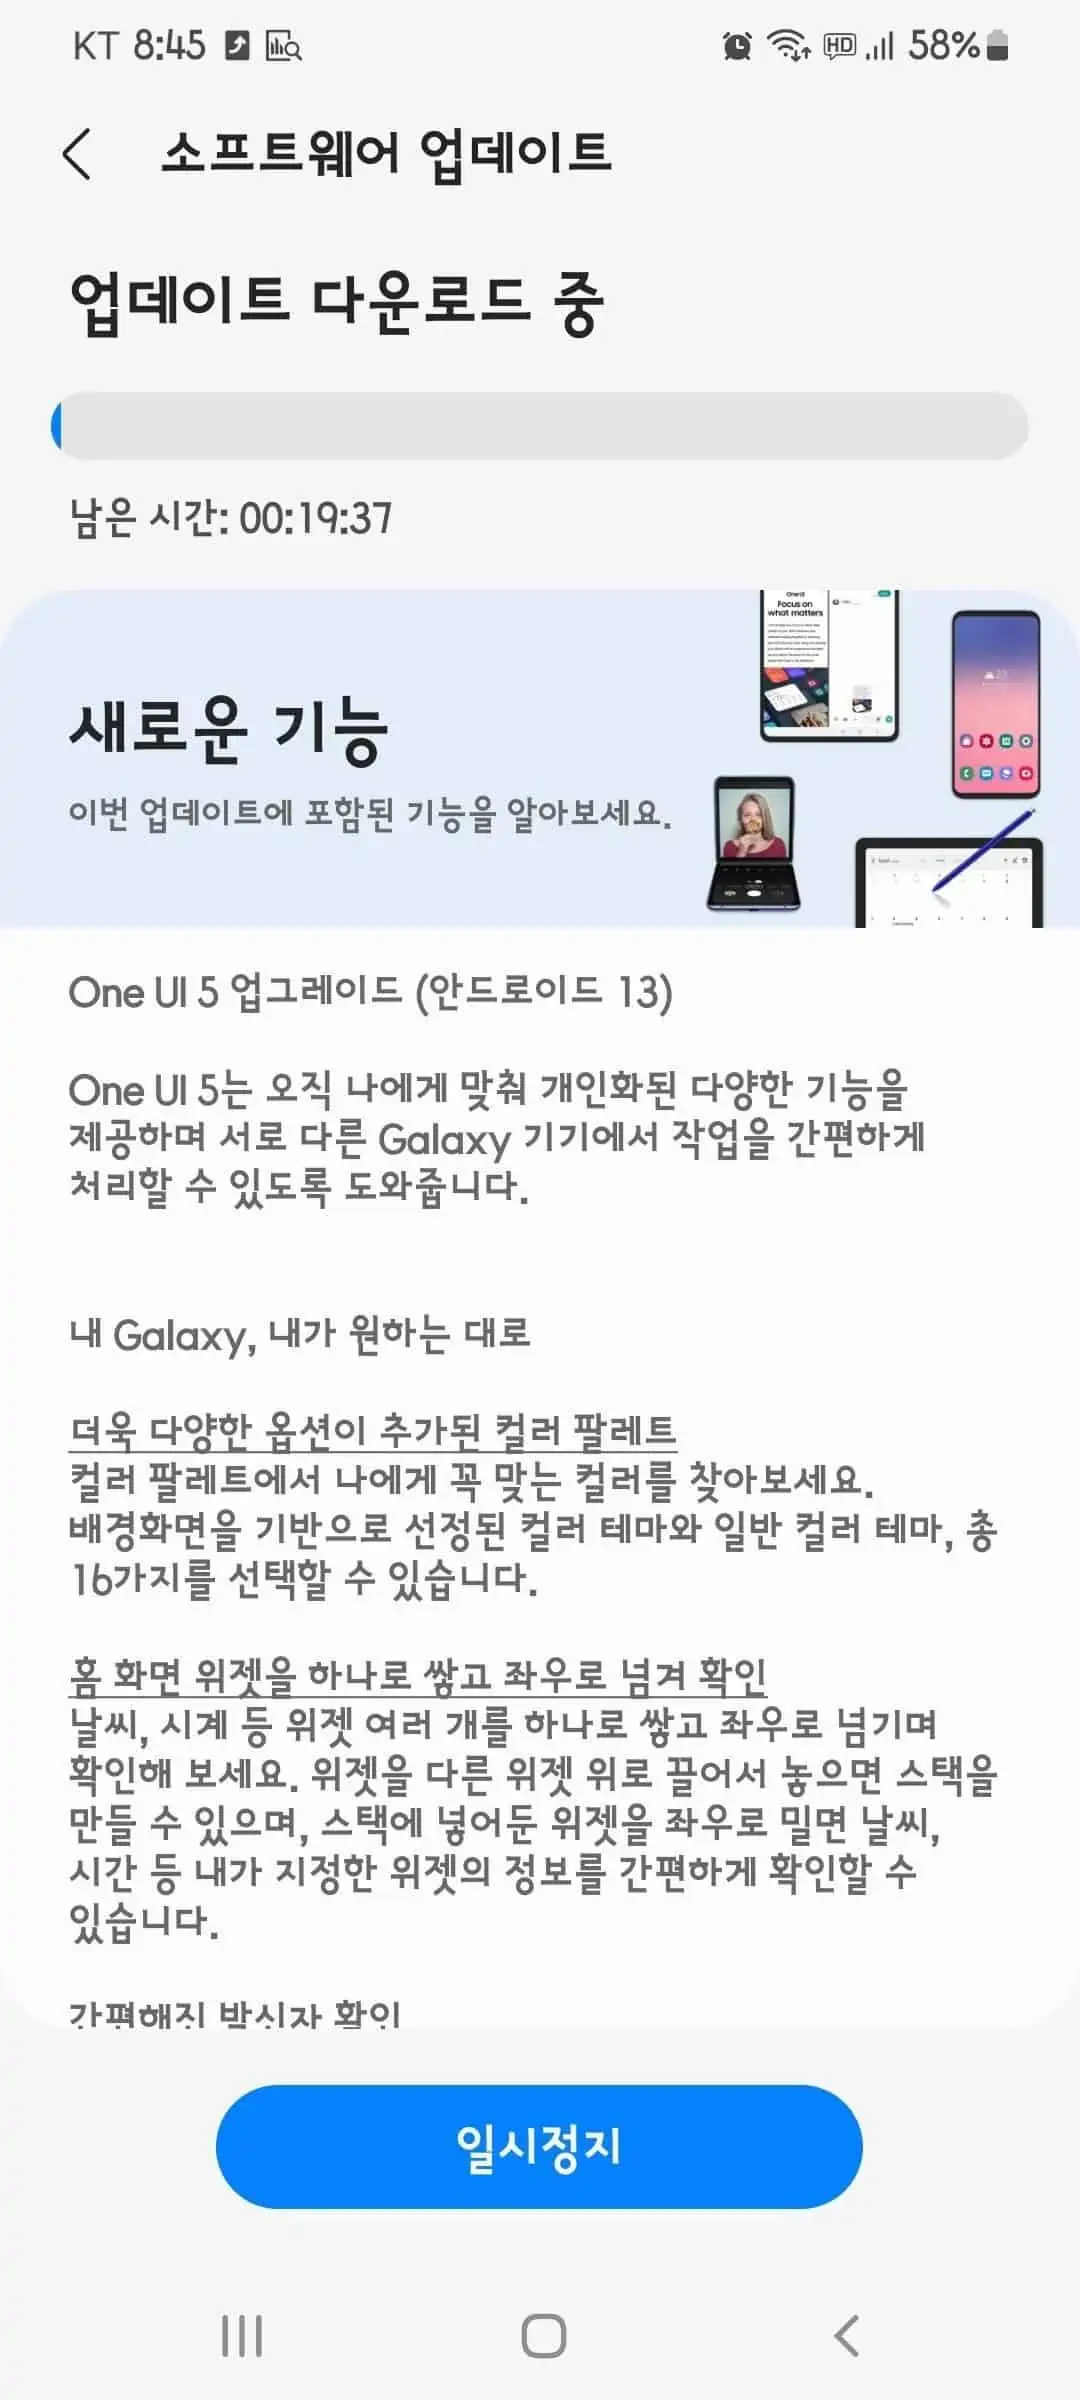 Galaxy S21 One UI 5 beta